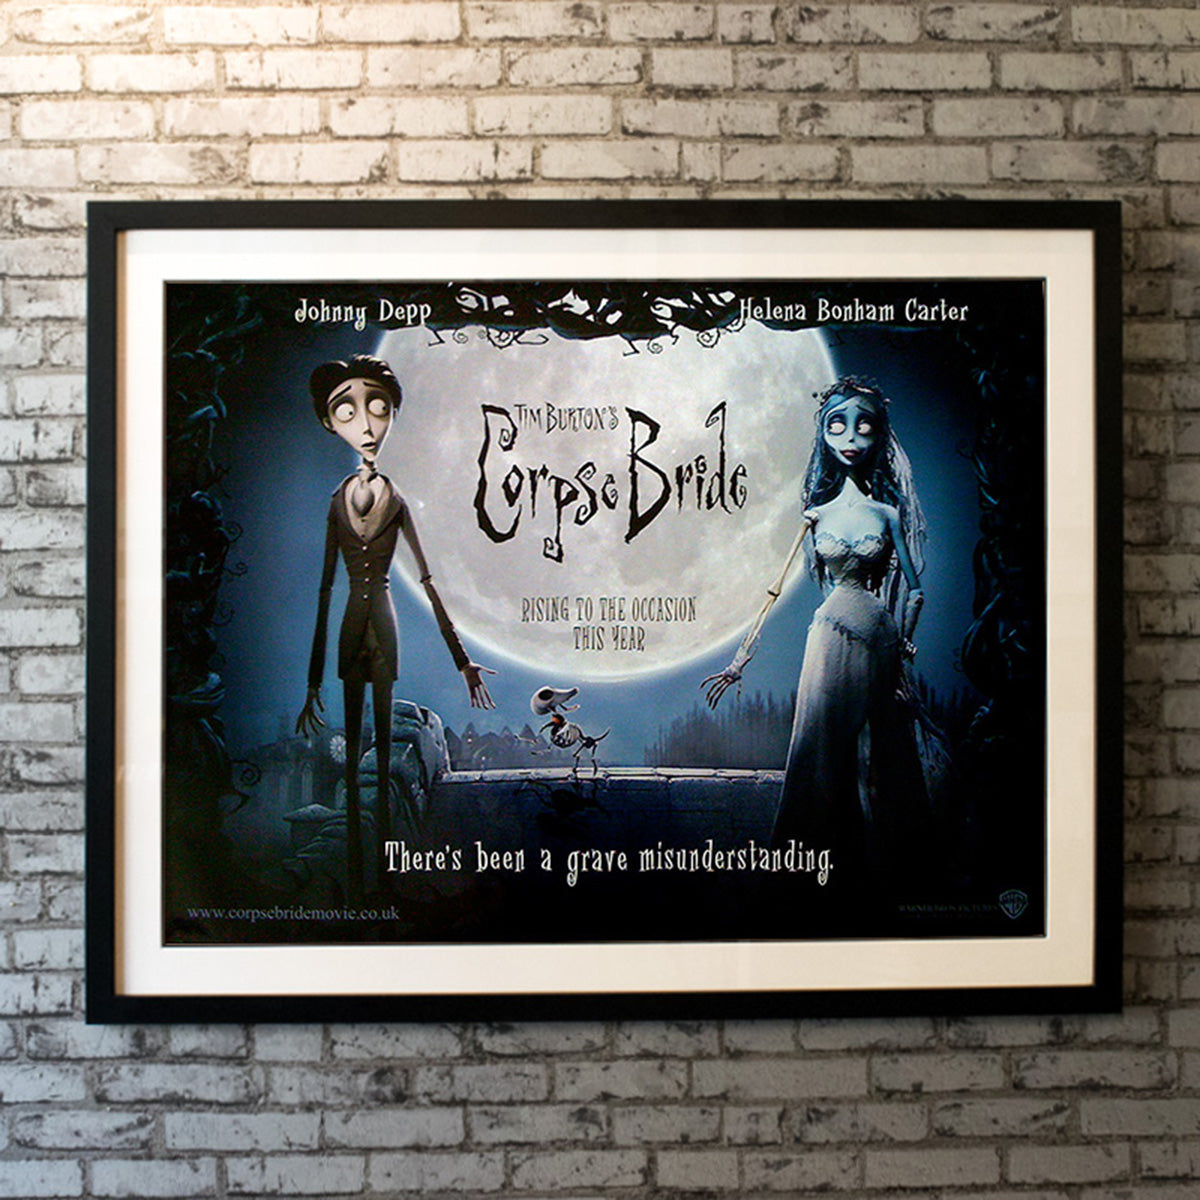 Original Movie Poster of Corpse Bride (2005)